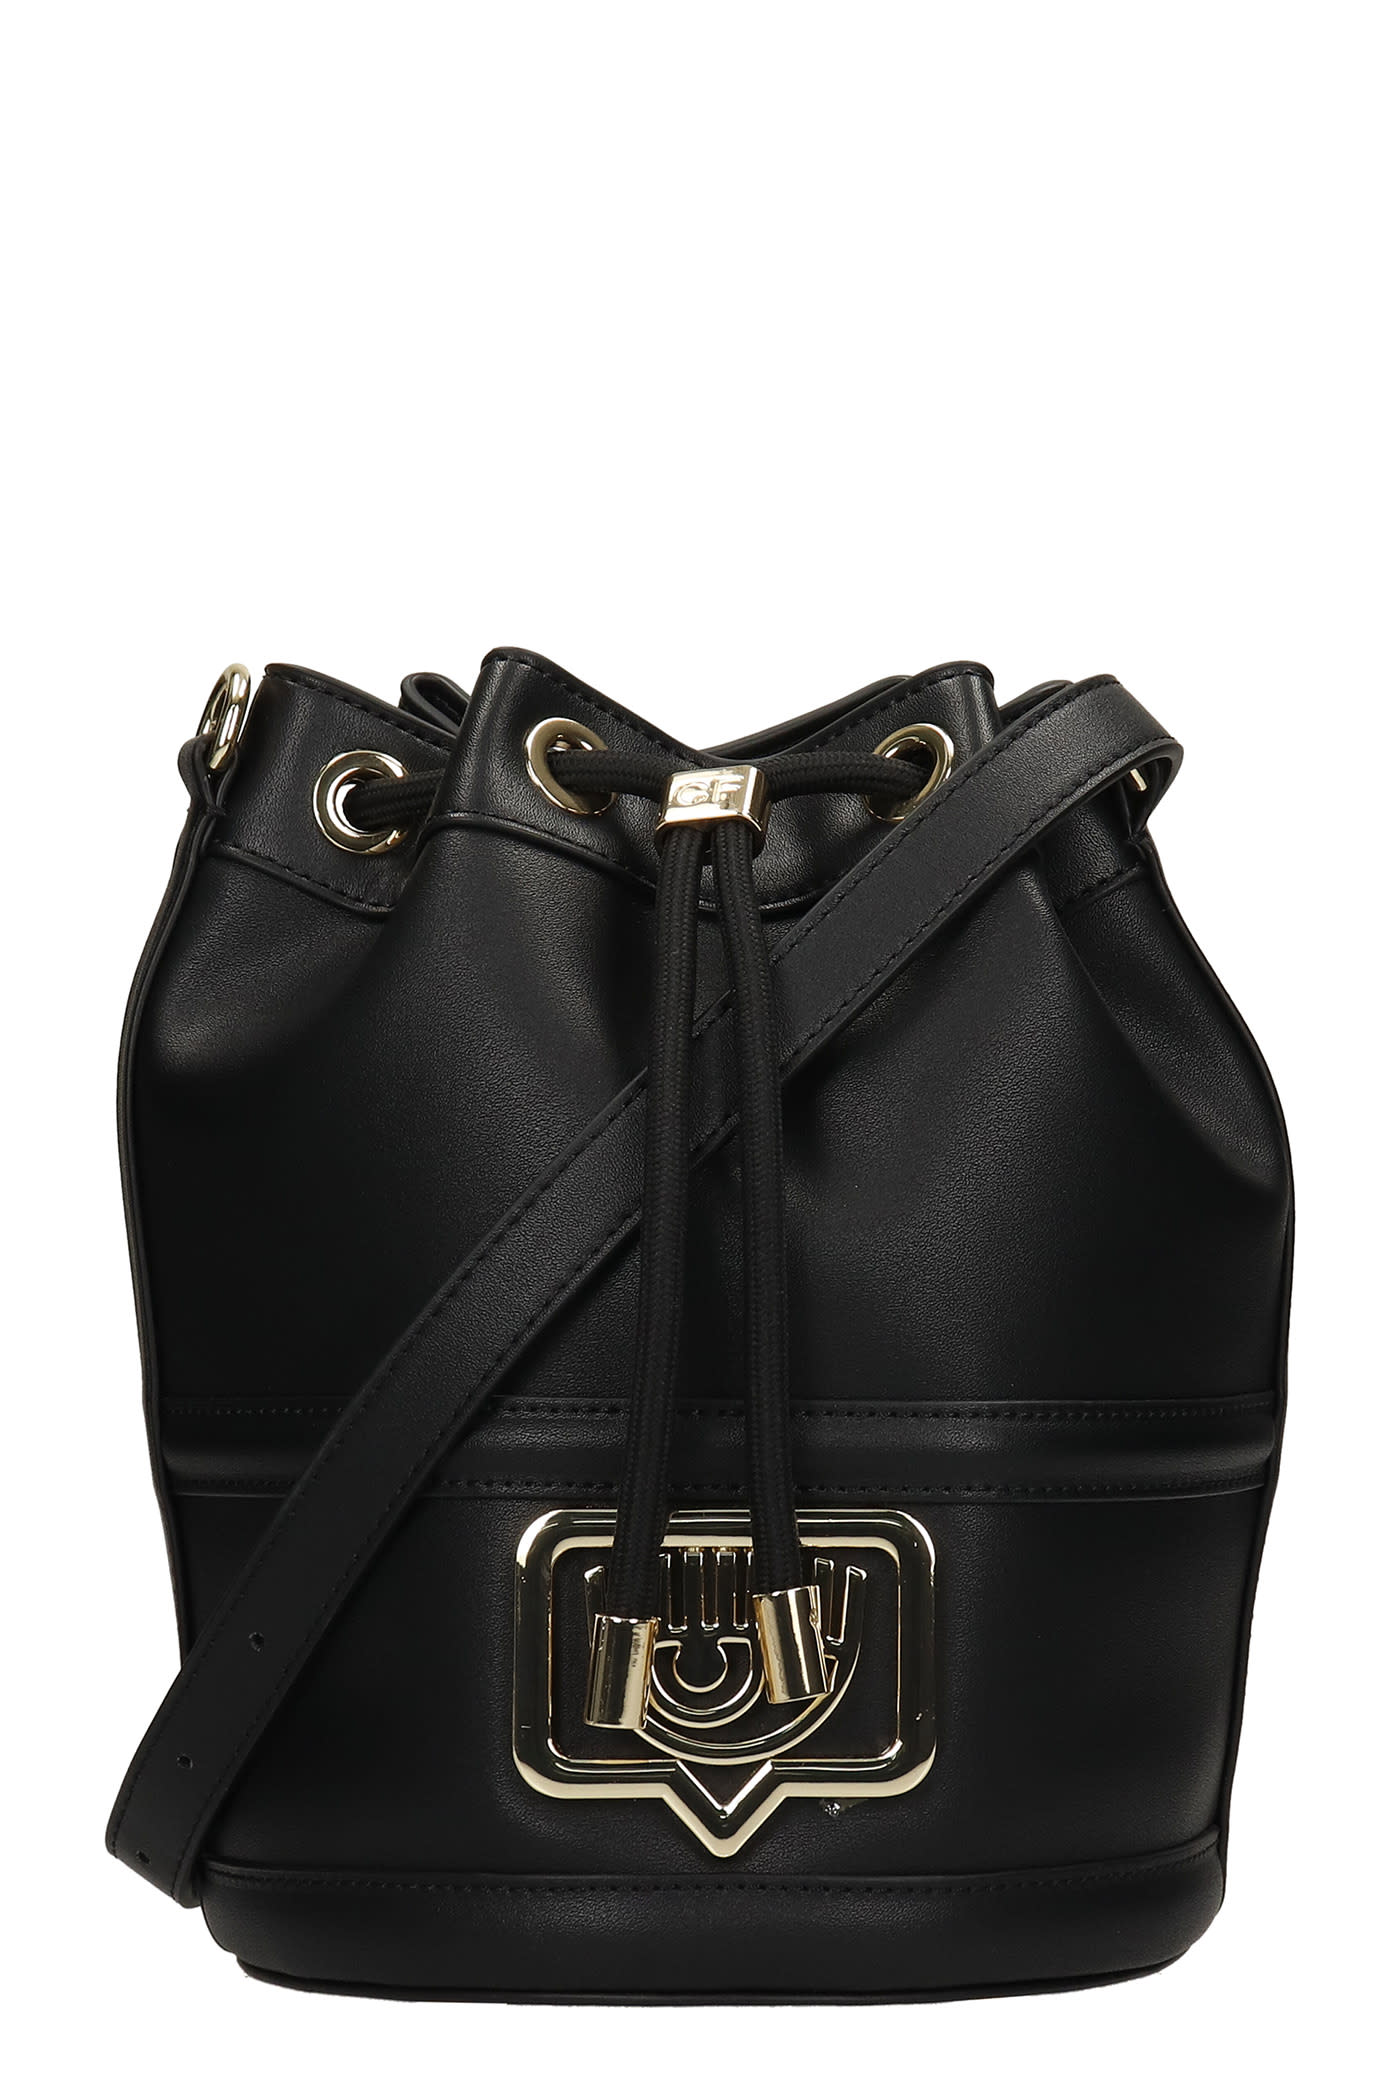 Chiara Ferragni Shoulder Bag In Black Leather